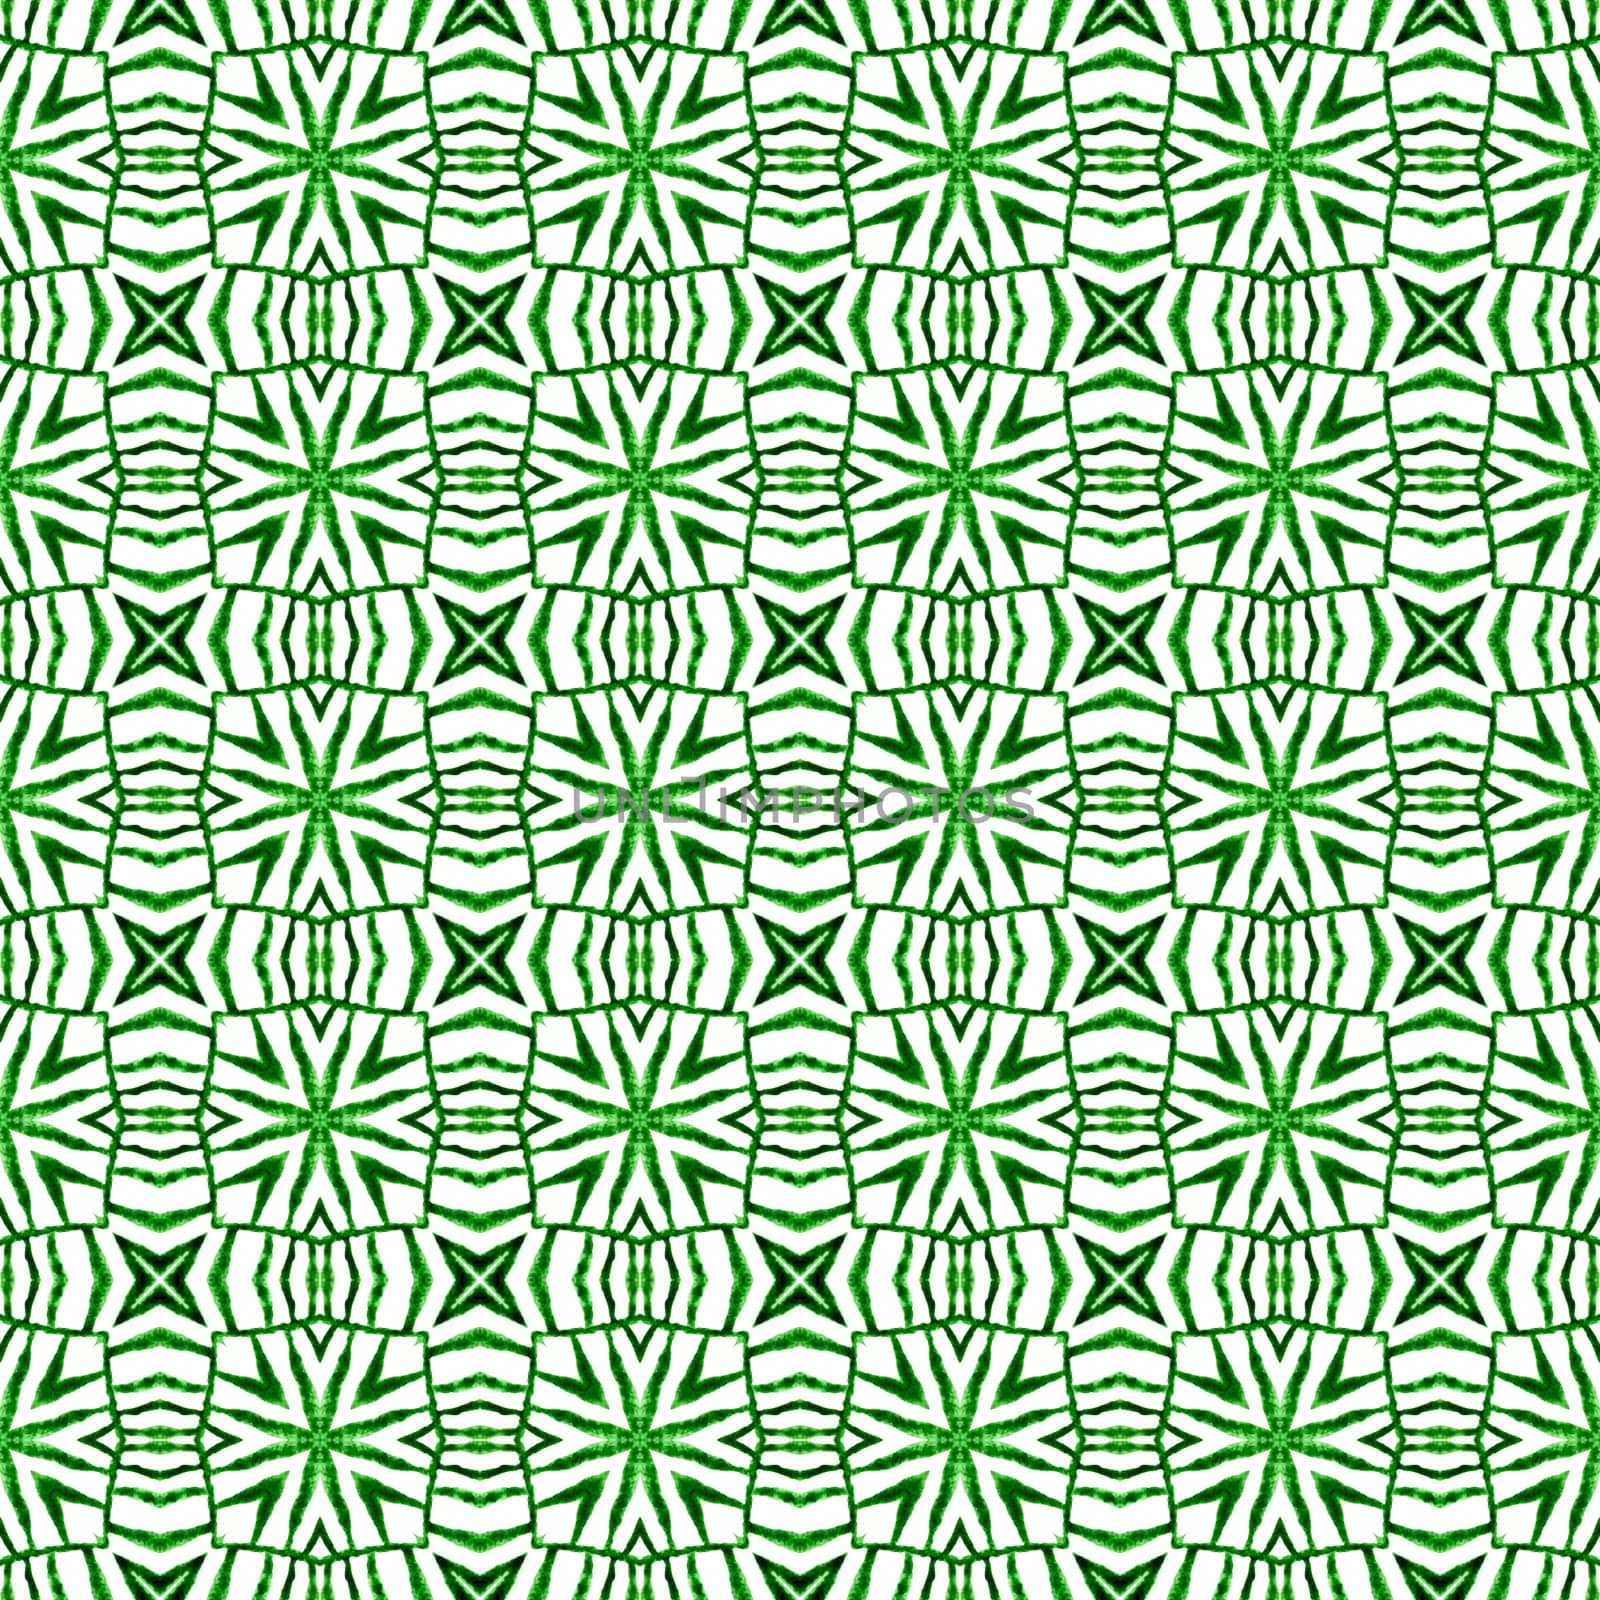 Organic tile. Green brilliant boho chic summer by beginagain